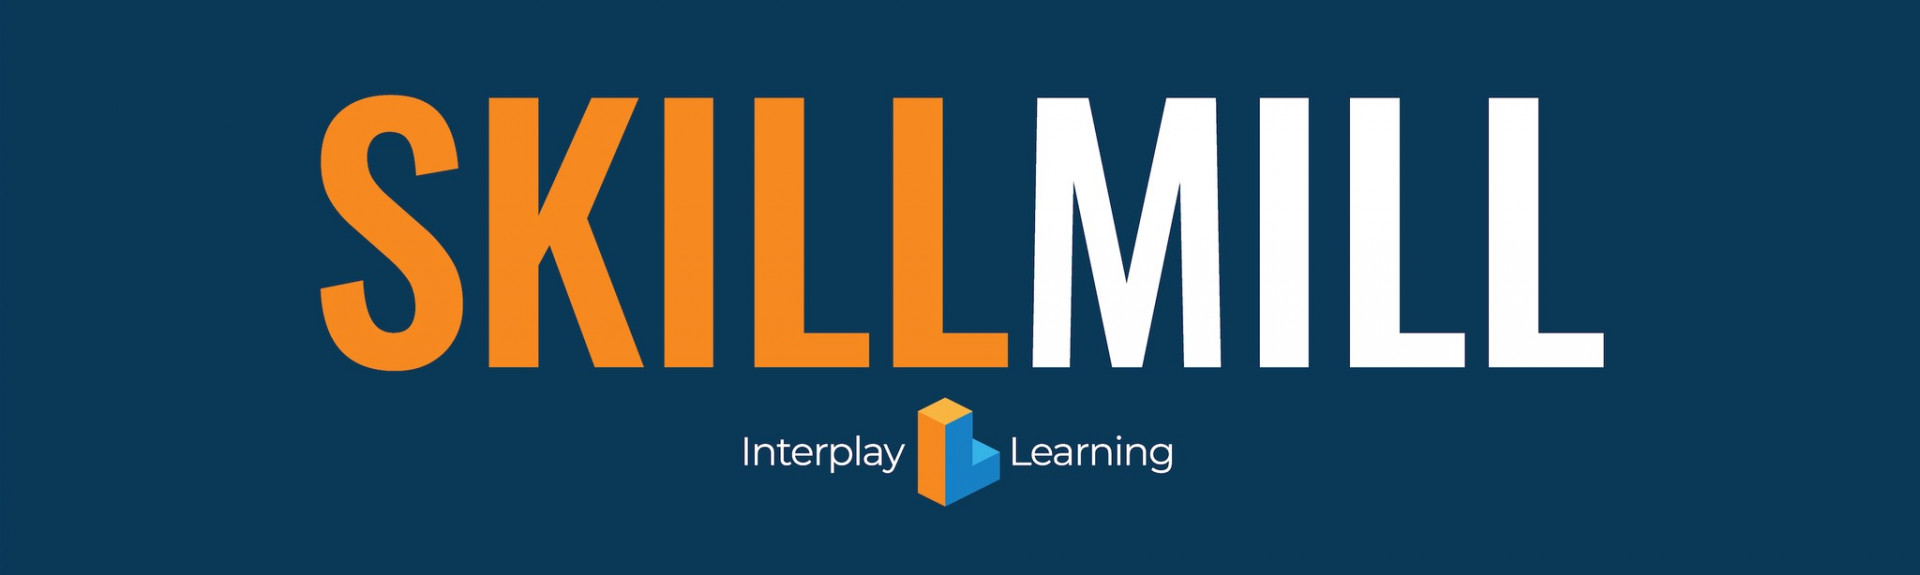 Interplay Learning SkillMill